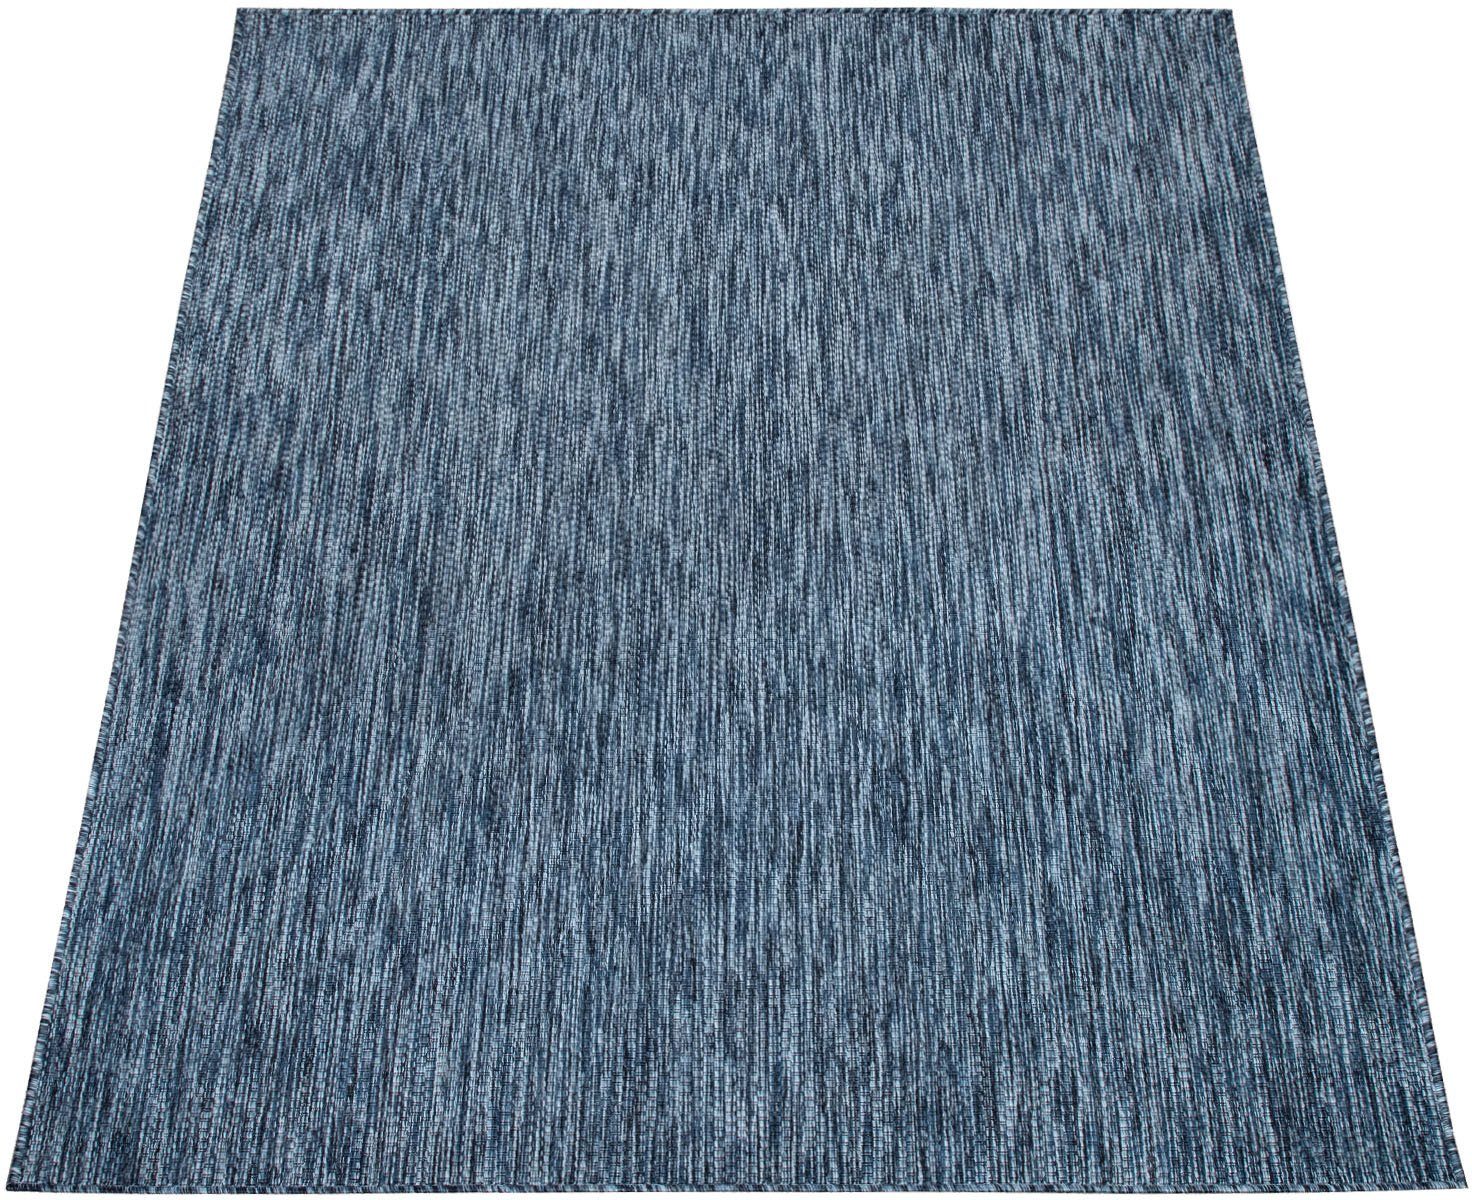 Teppich Venedig, Home affaire, rechteckig, Höhe: 4 mm, Flachgewebe, Sisal-Optik, meliert, UV-beständig, Outdoor geeignet